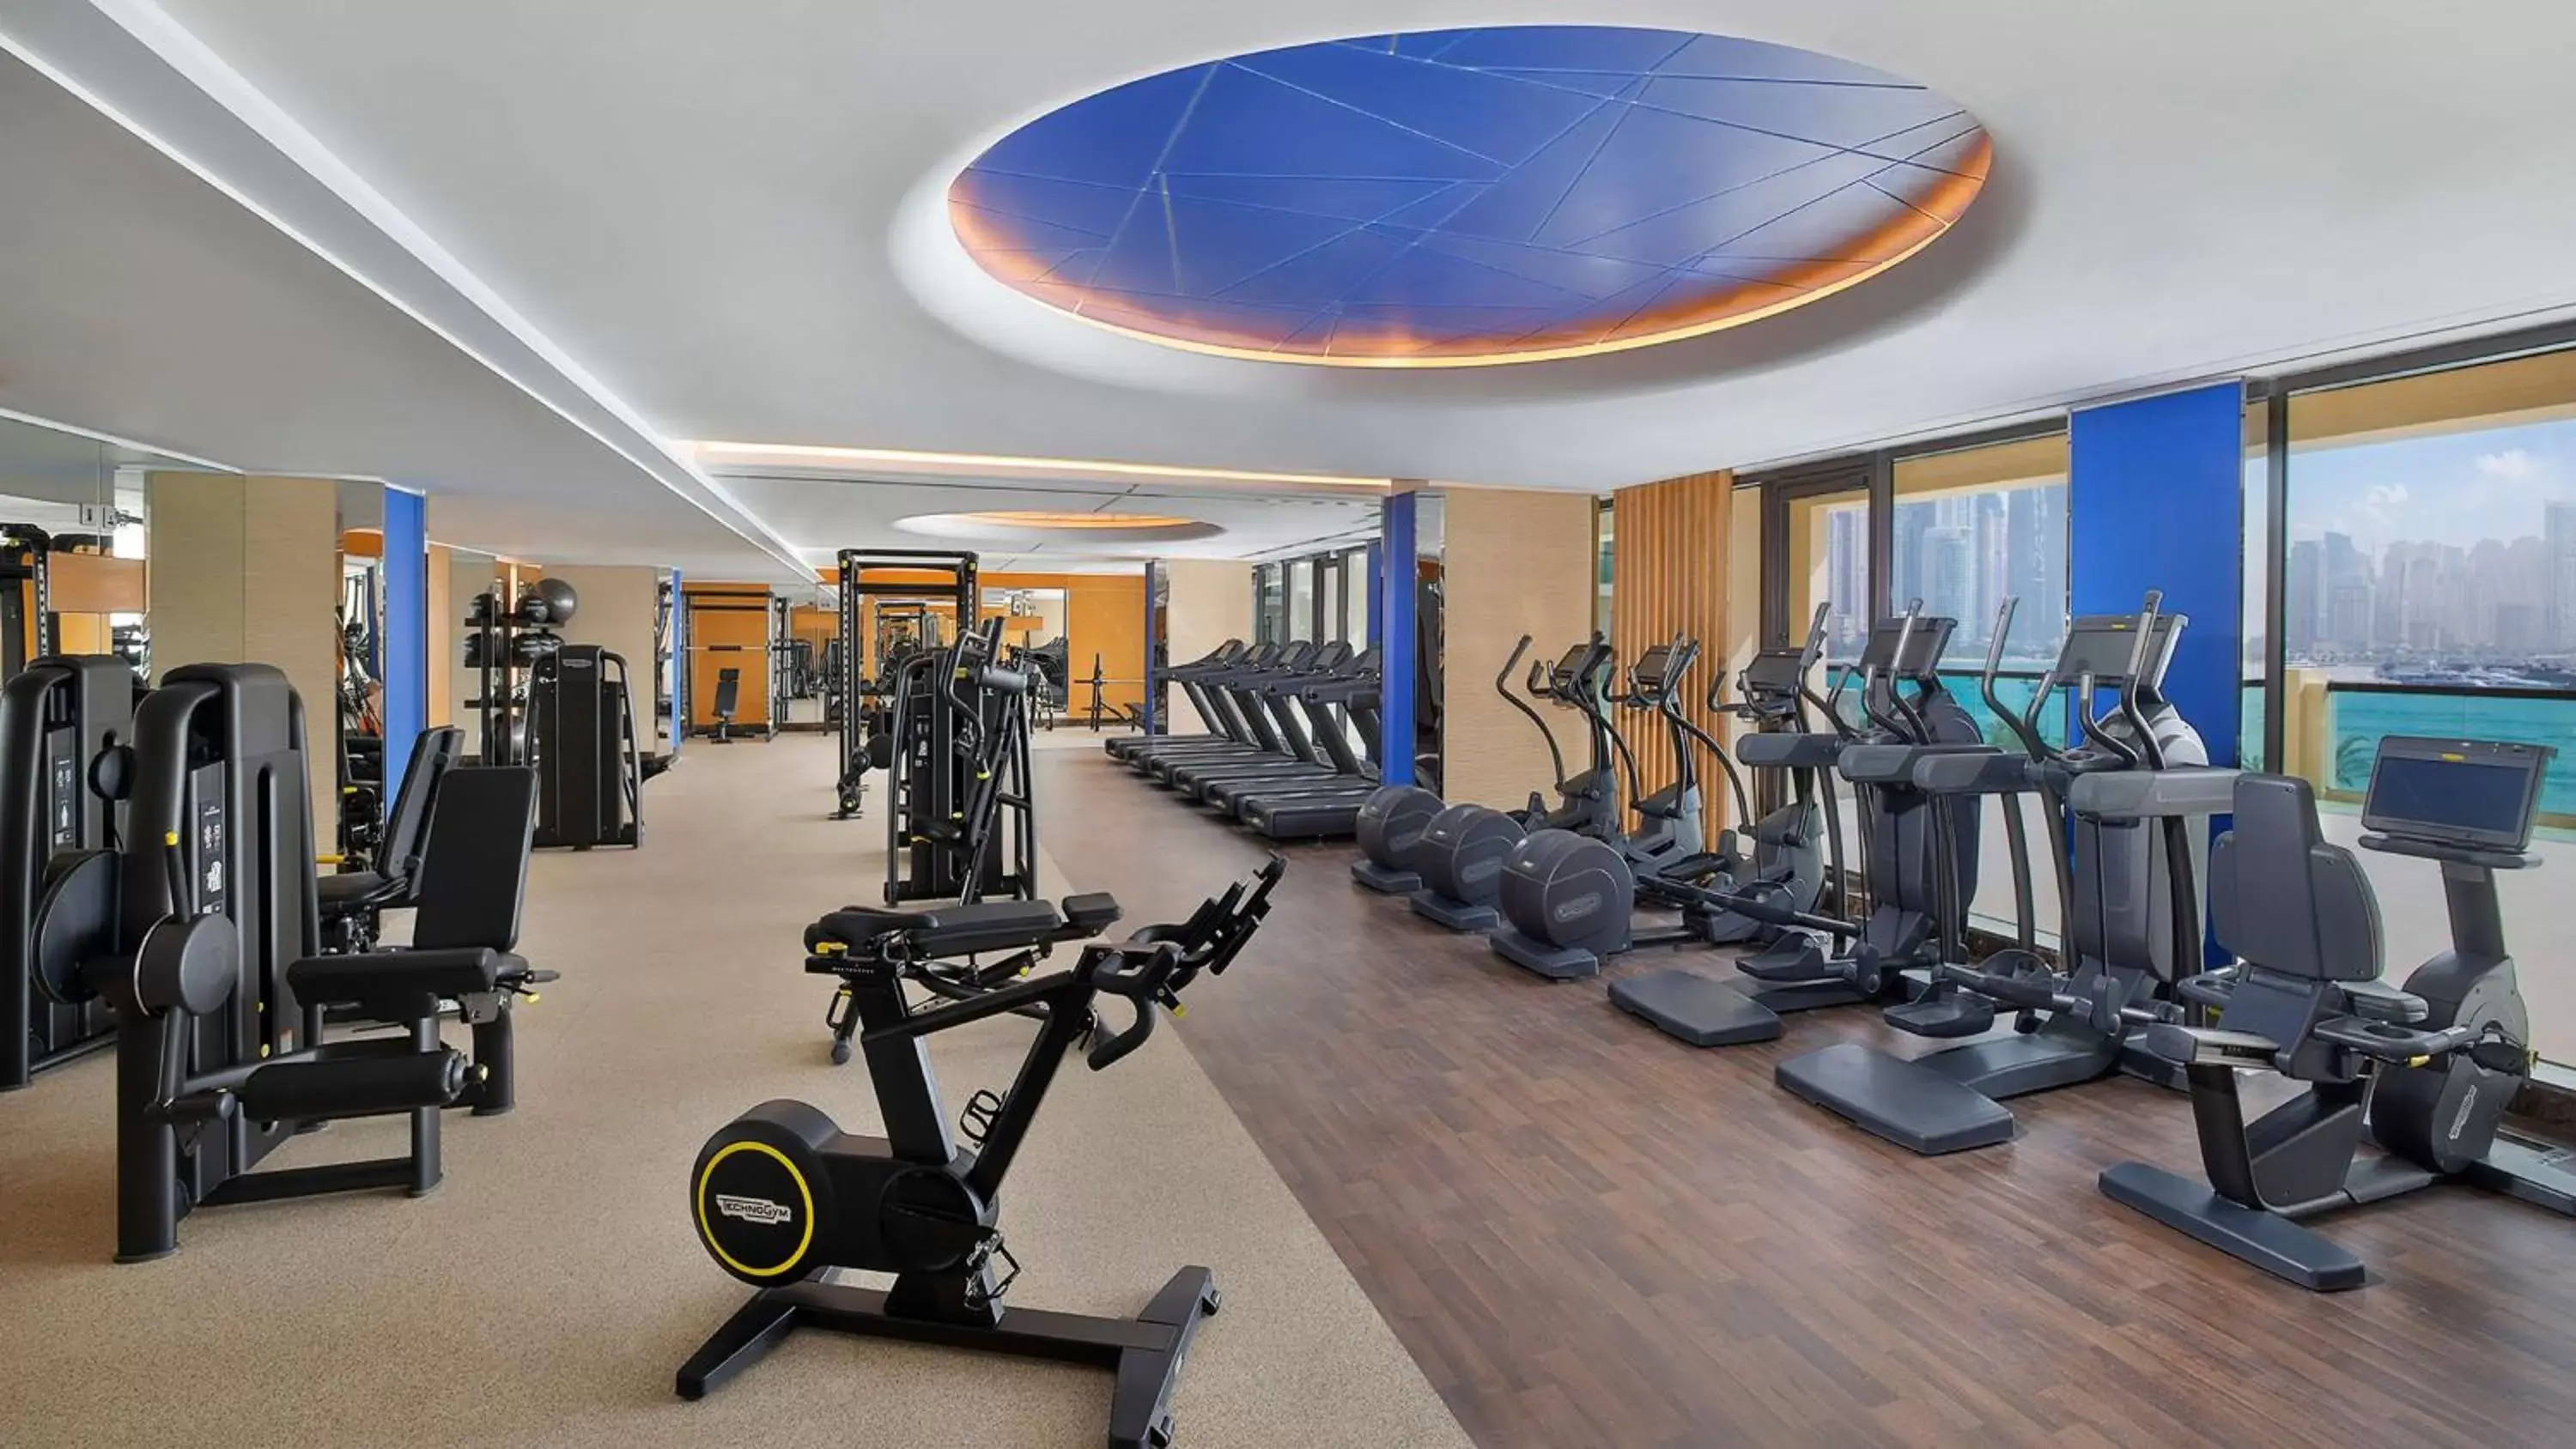 Fitness centre/facilities, Fitness Center/Facilities in Hilton Dubai Palm Jumeirah